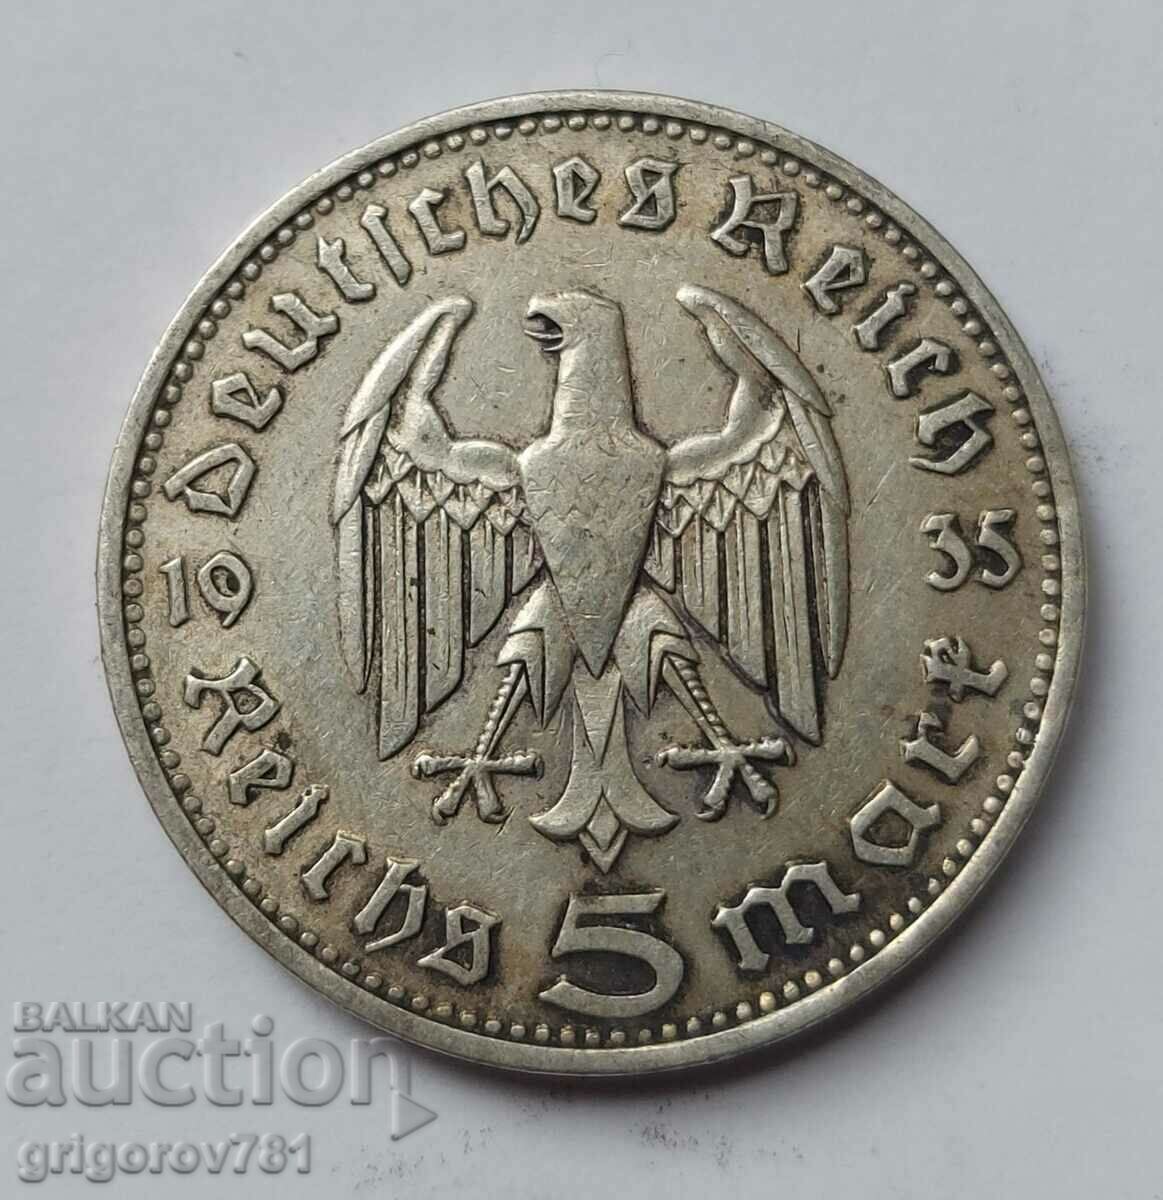 5 Mark Silver Γερμανία 1935 D III Reich Silver Coin #23